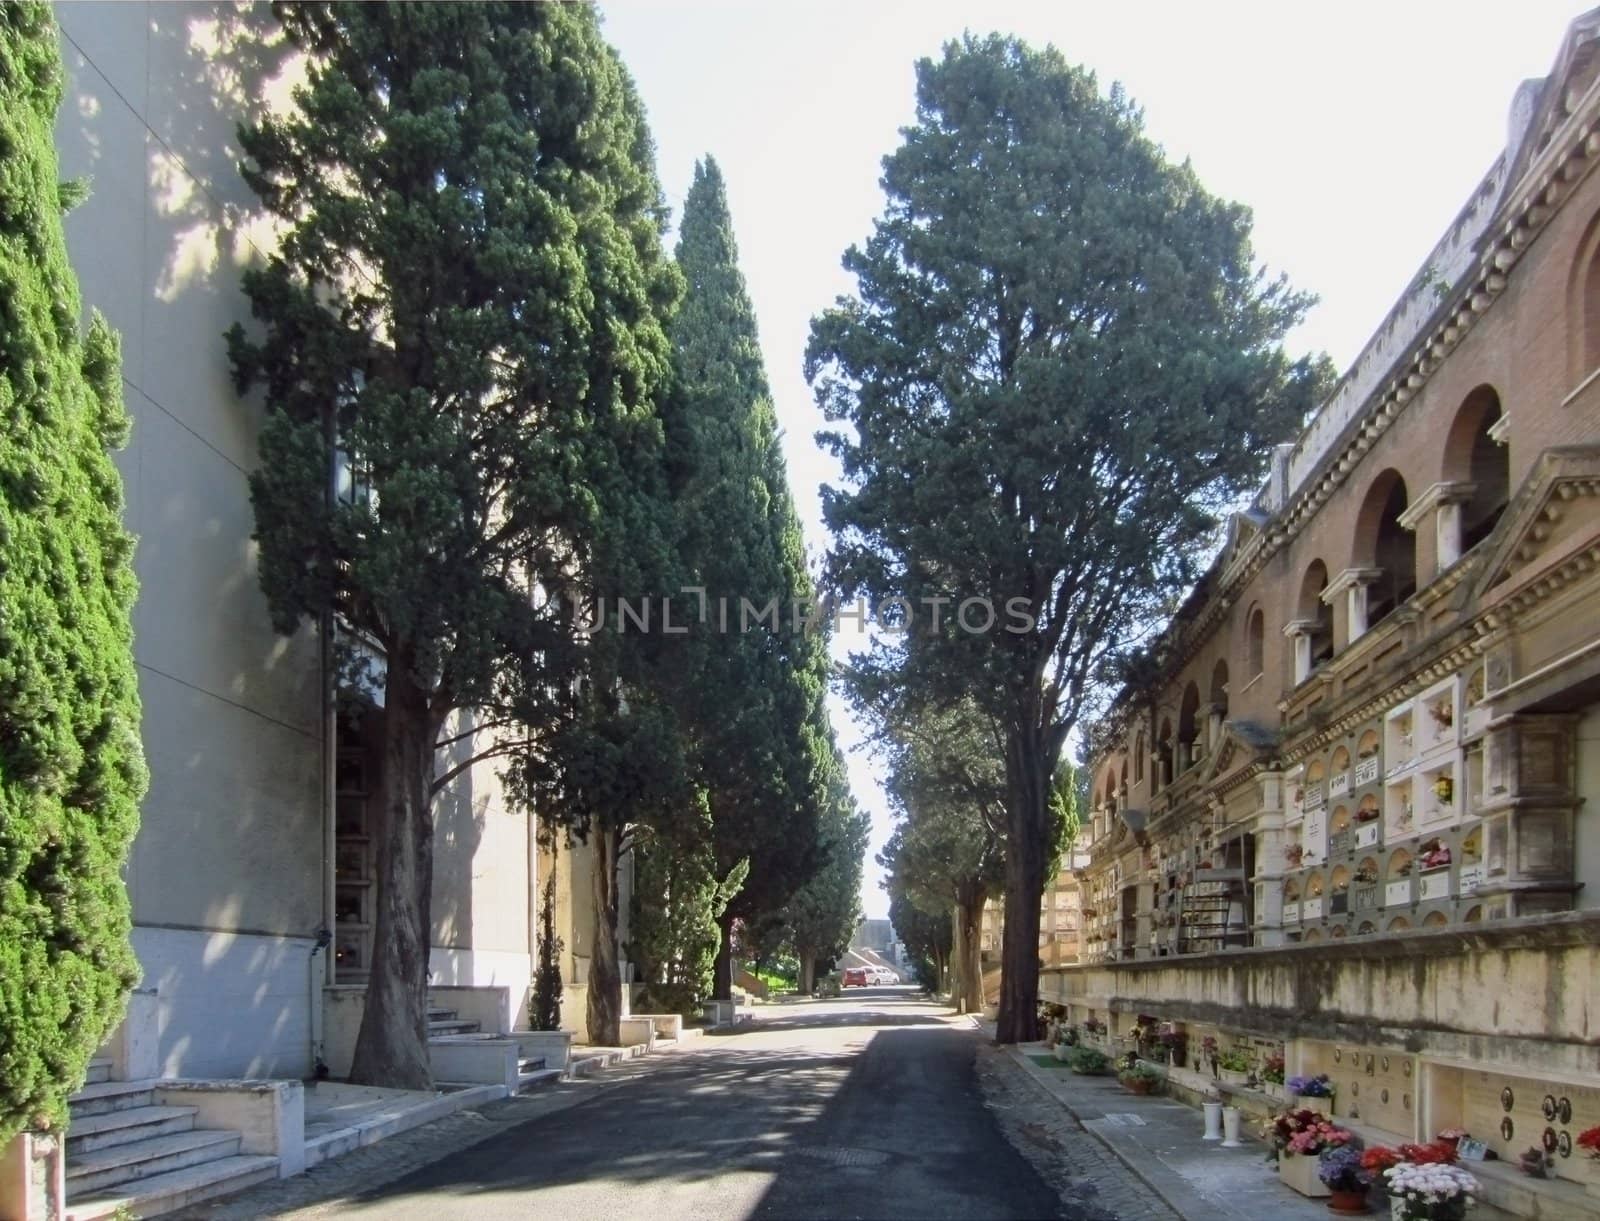 Cemetery, Rome by jol66